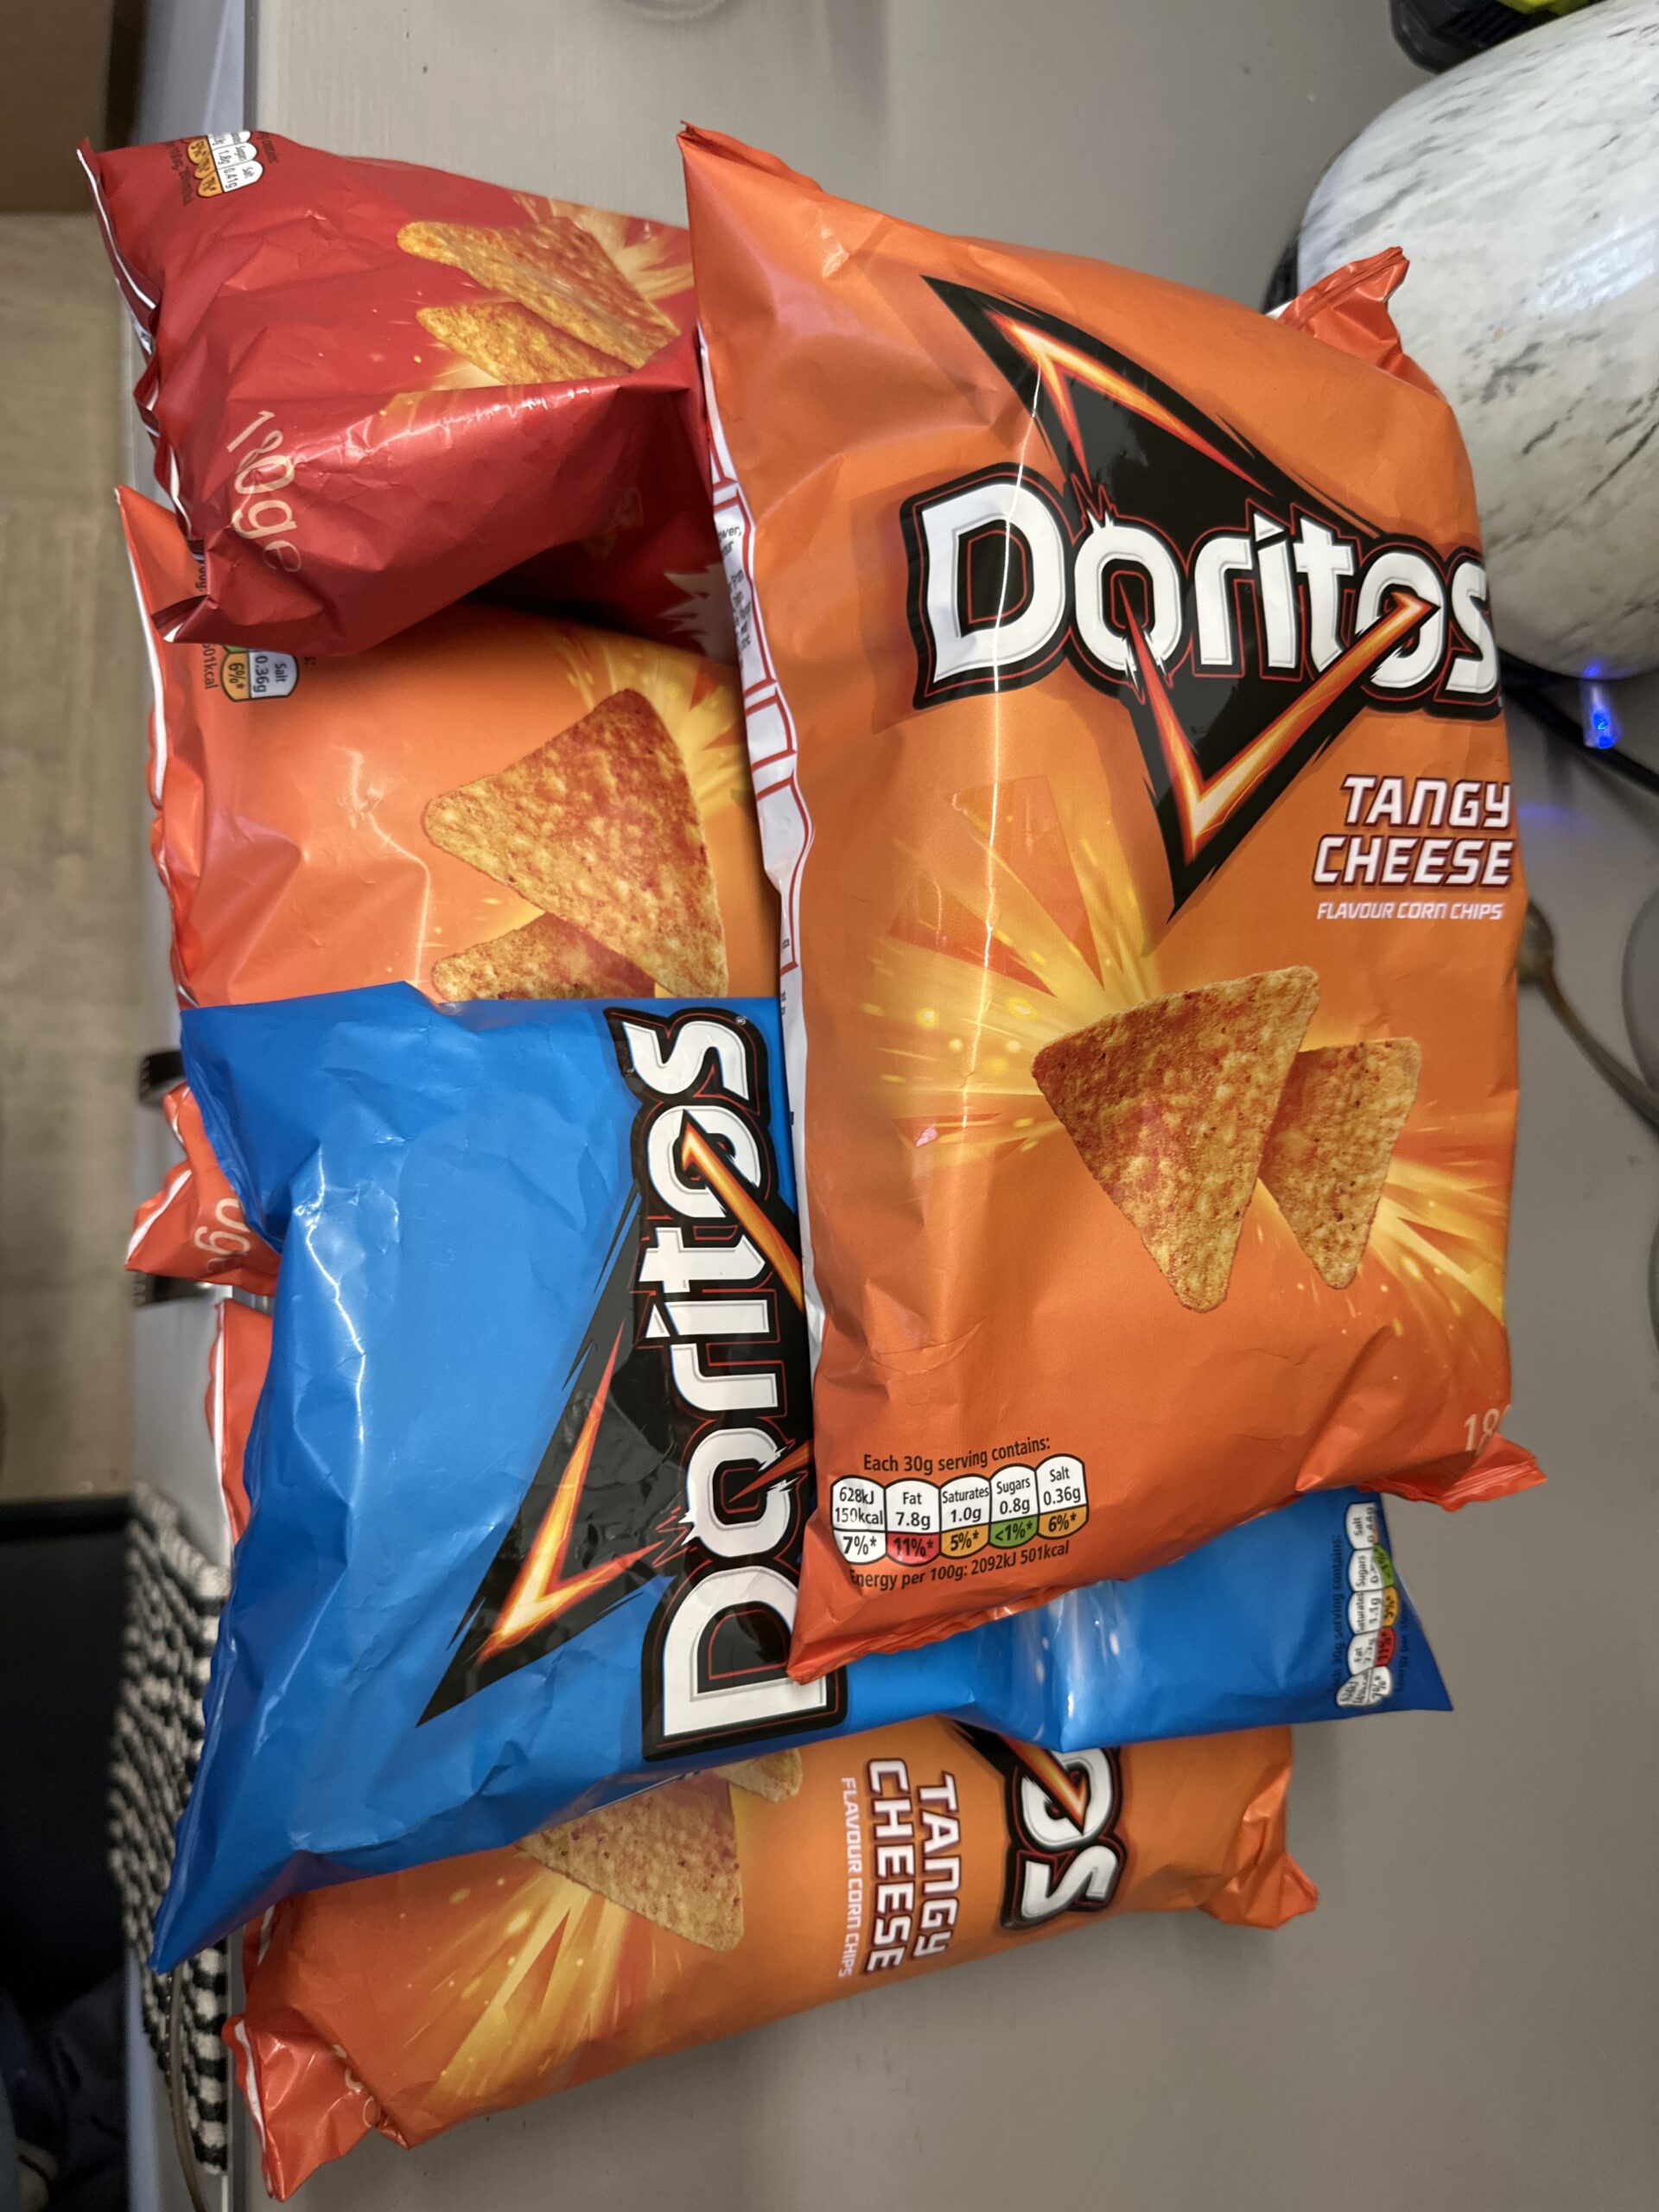 Doritos complaint Doritos crisps